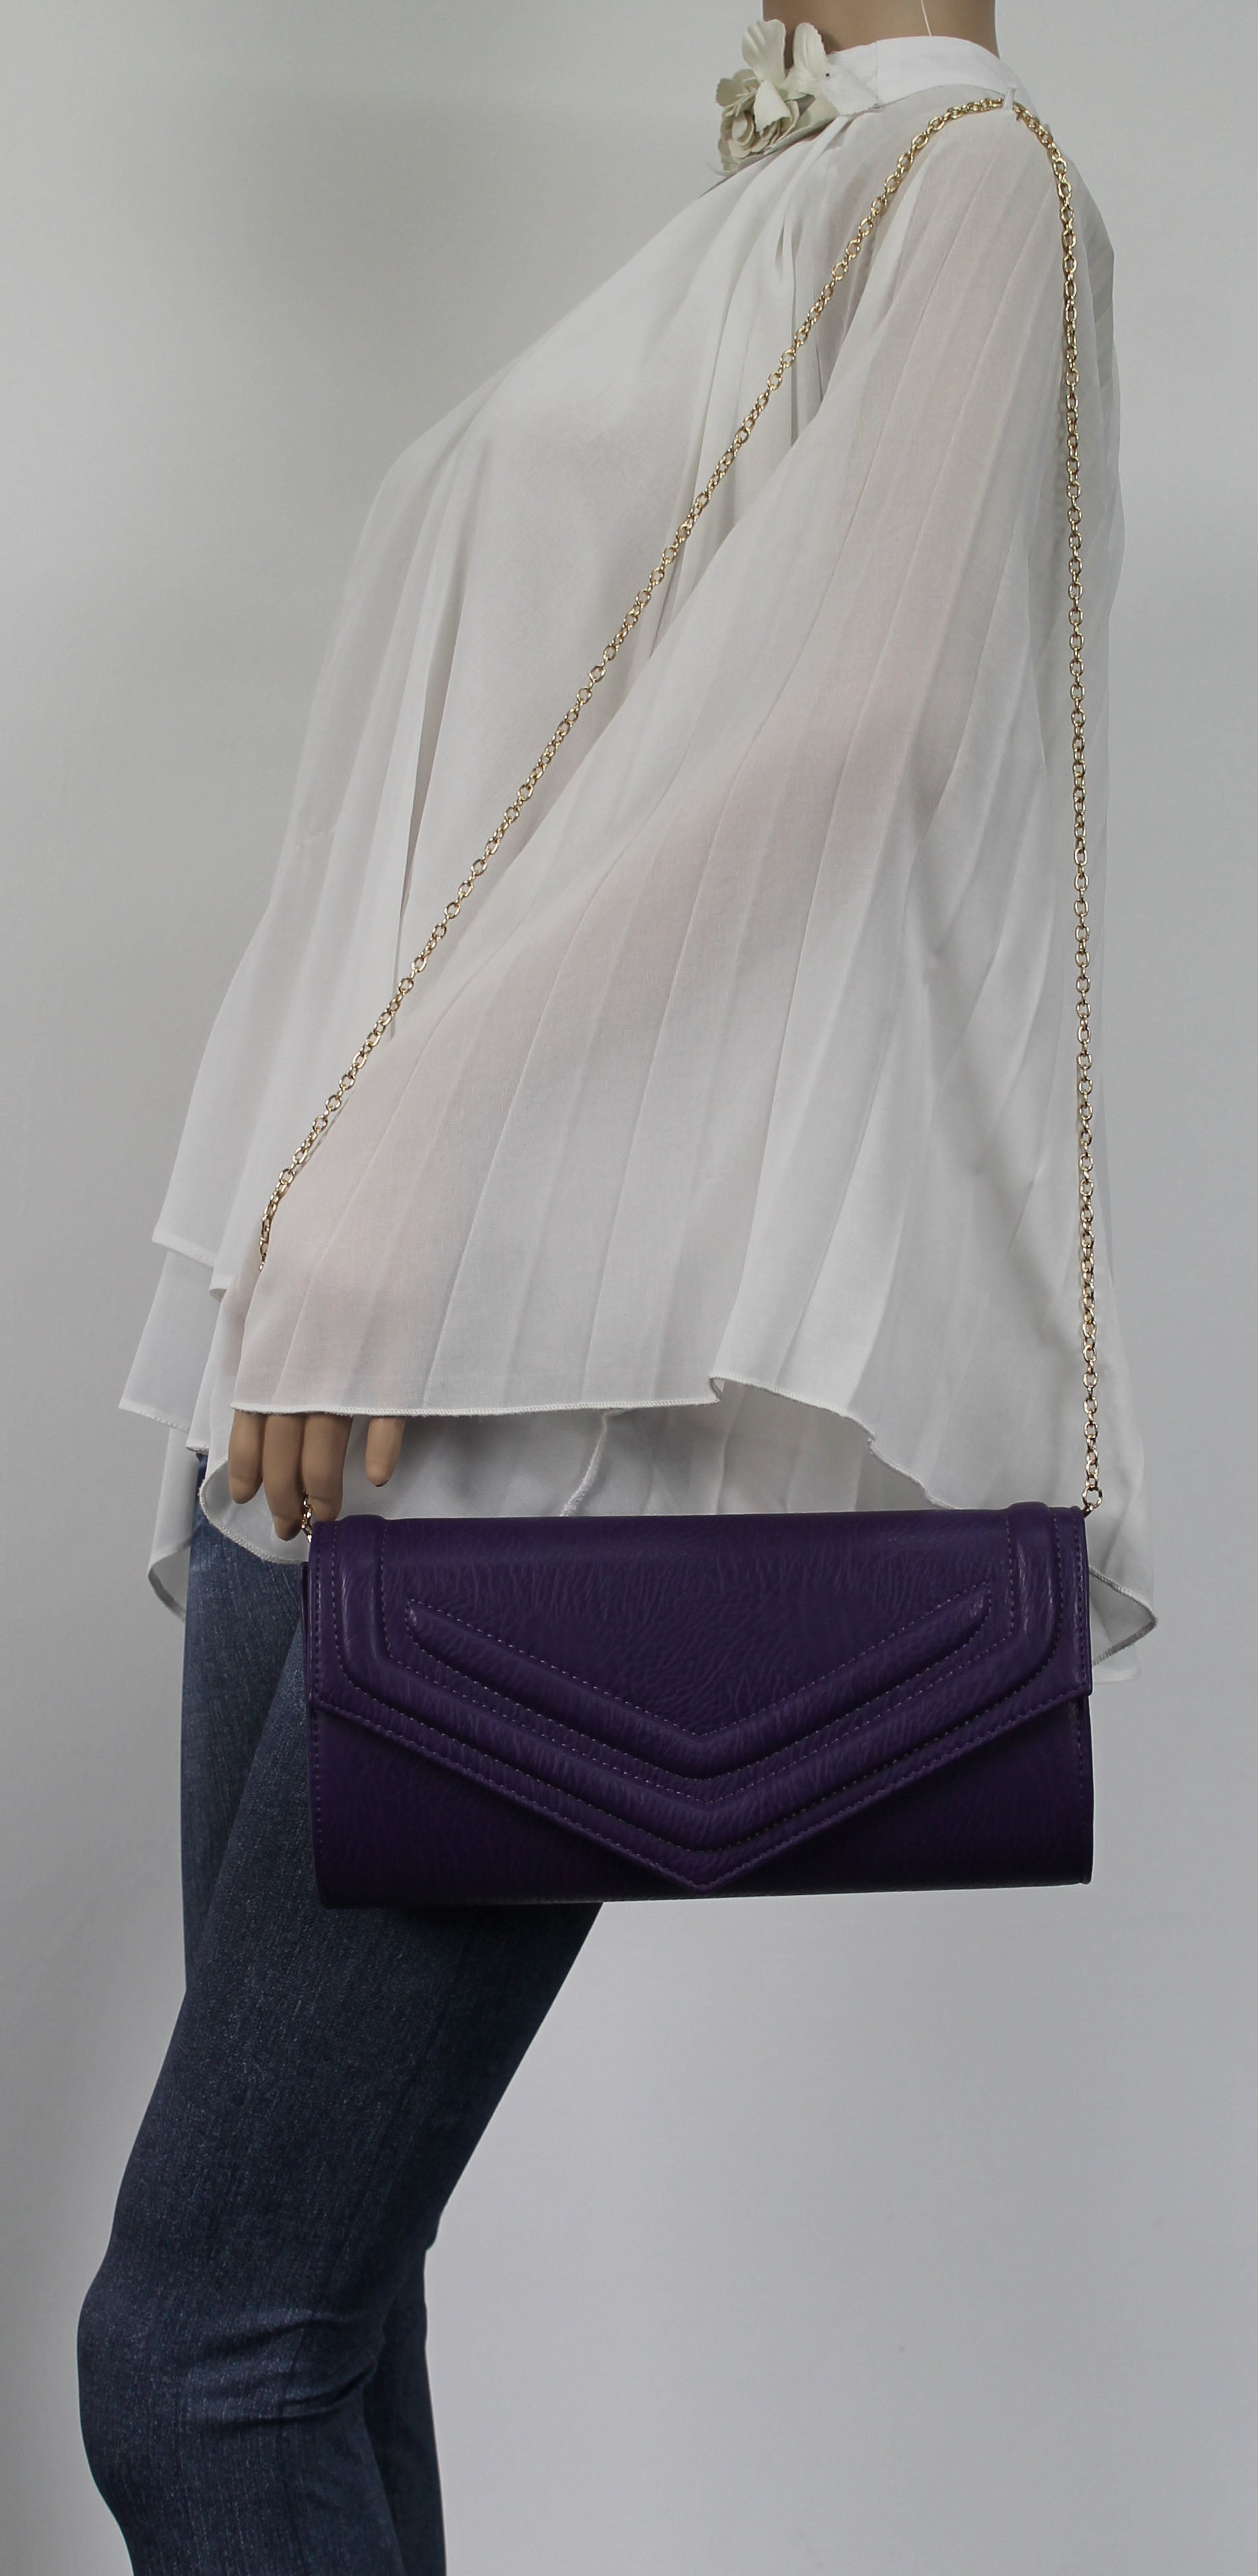 SWANKYSWANS Skye Plain V Clutch Bag Purple Cute Cheap Clutch Bag For Weddings School and Work